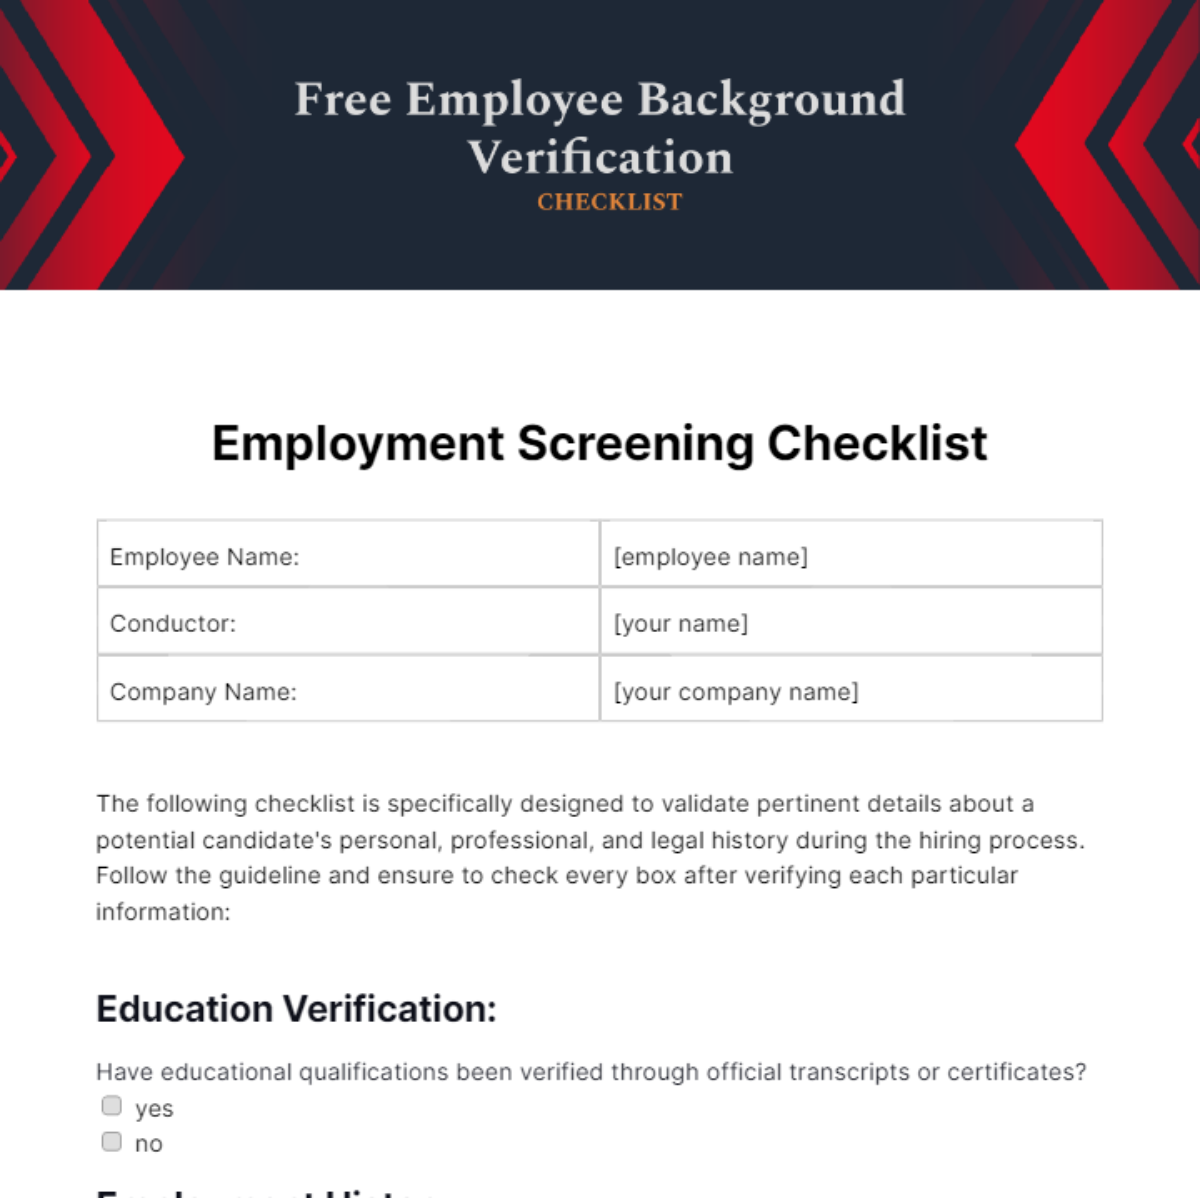 Free Employee Background Verification Checklist Template